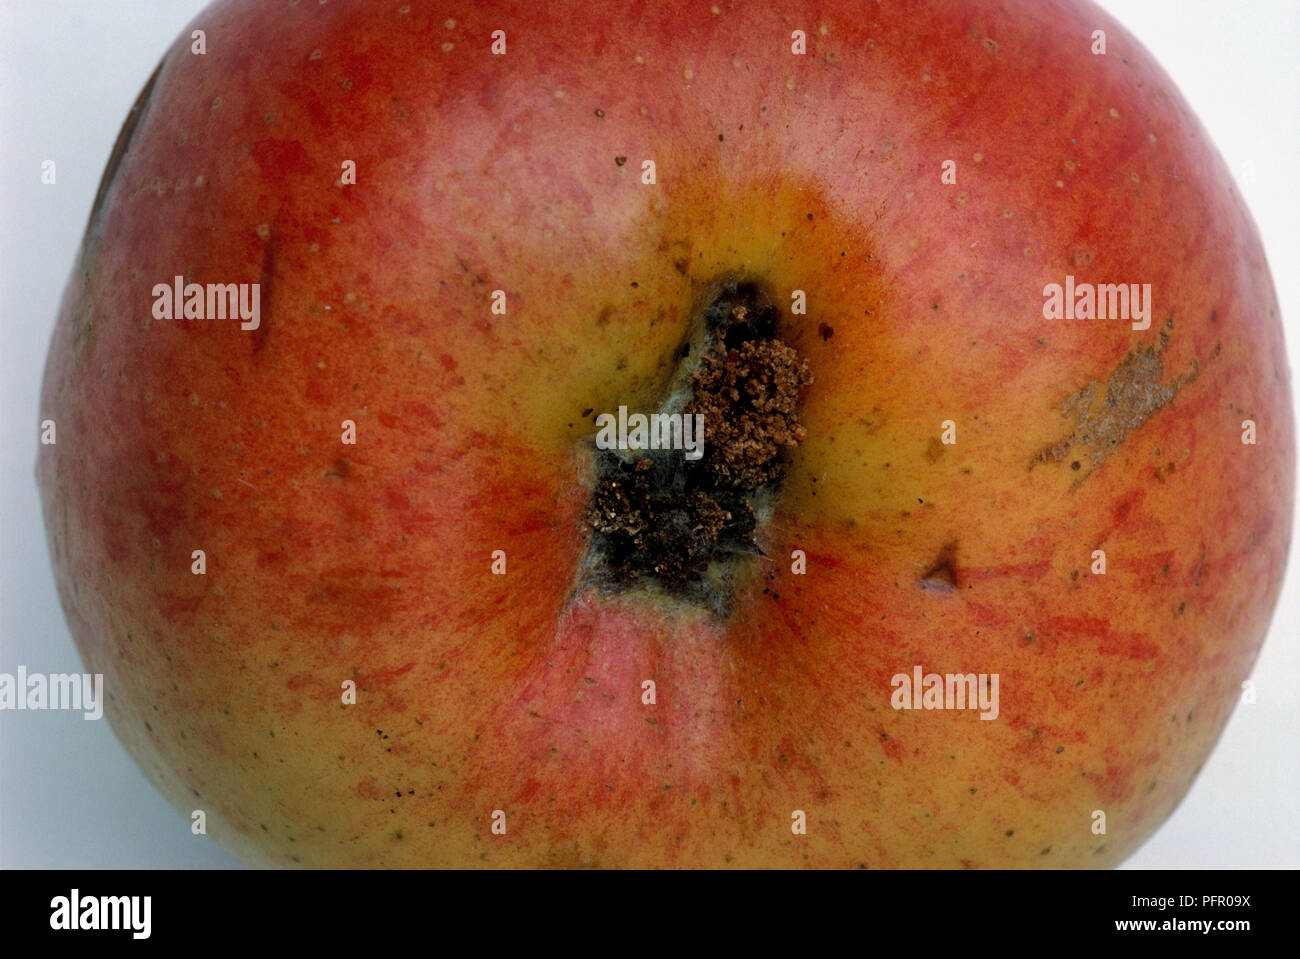 Apple damaged by codling moth infestation (Cydia pomonella) Stock Photo